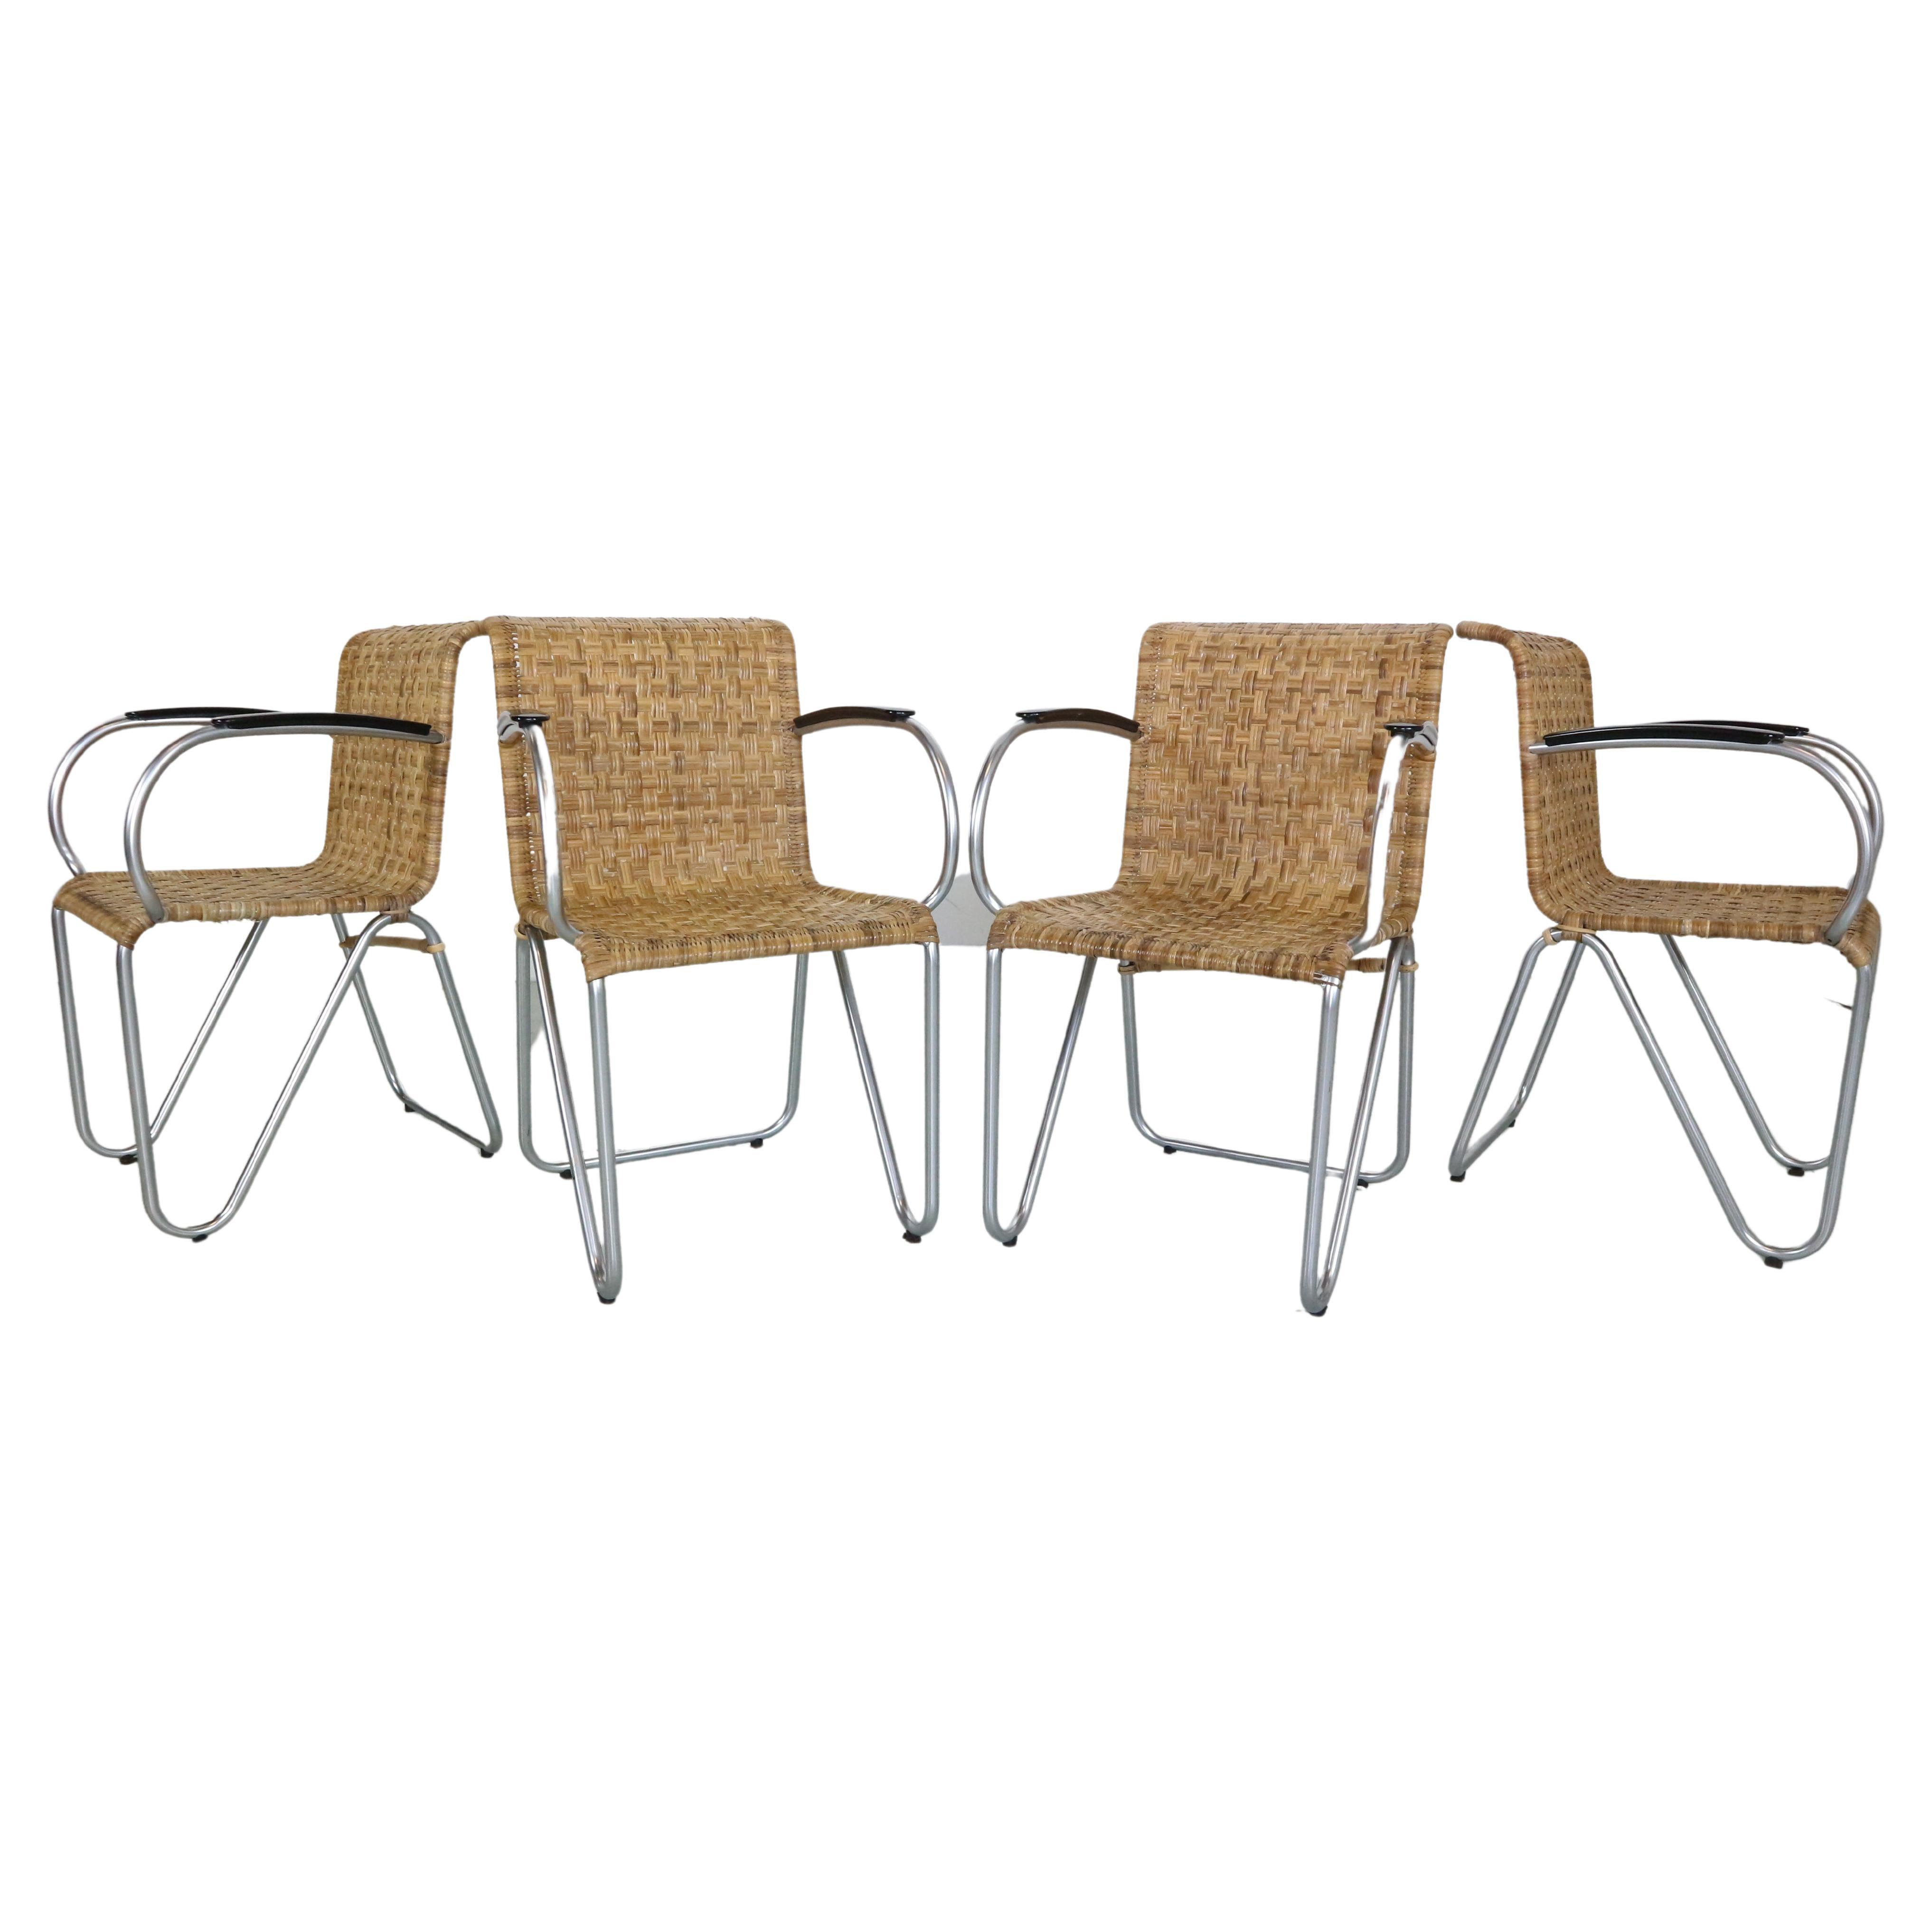 Gispen Set Of 4 Diagonal Wicker& Tube Frame Armchairs, 1930's Dutch Design For Sale